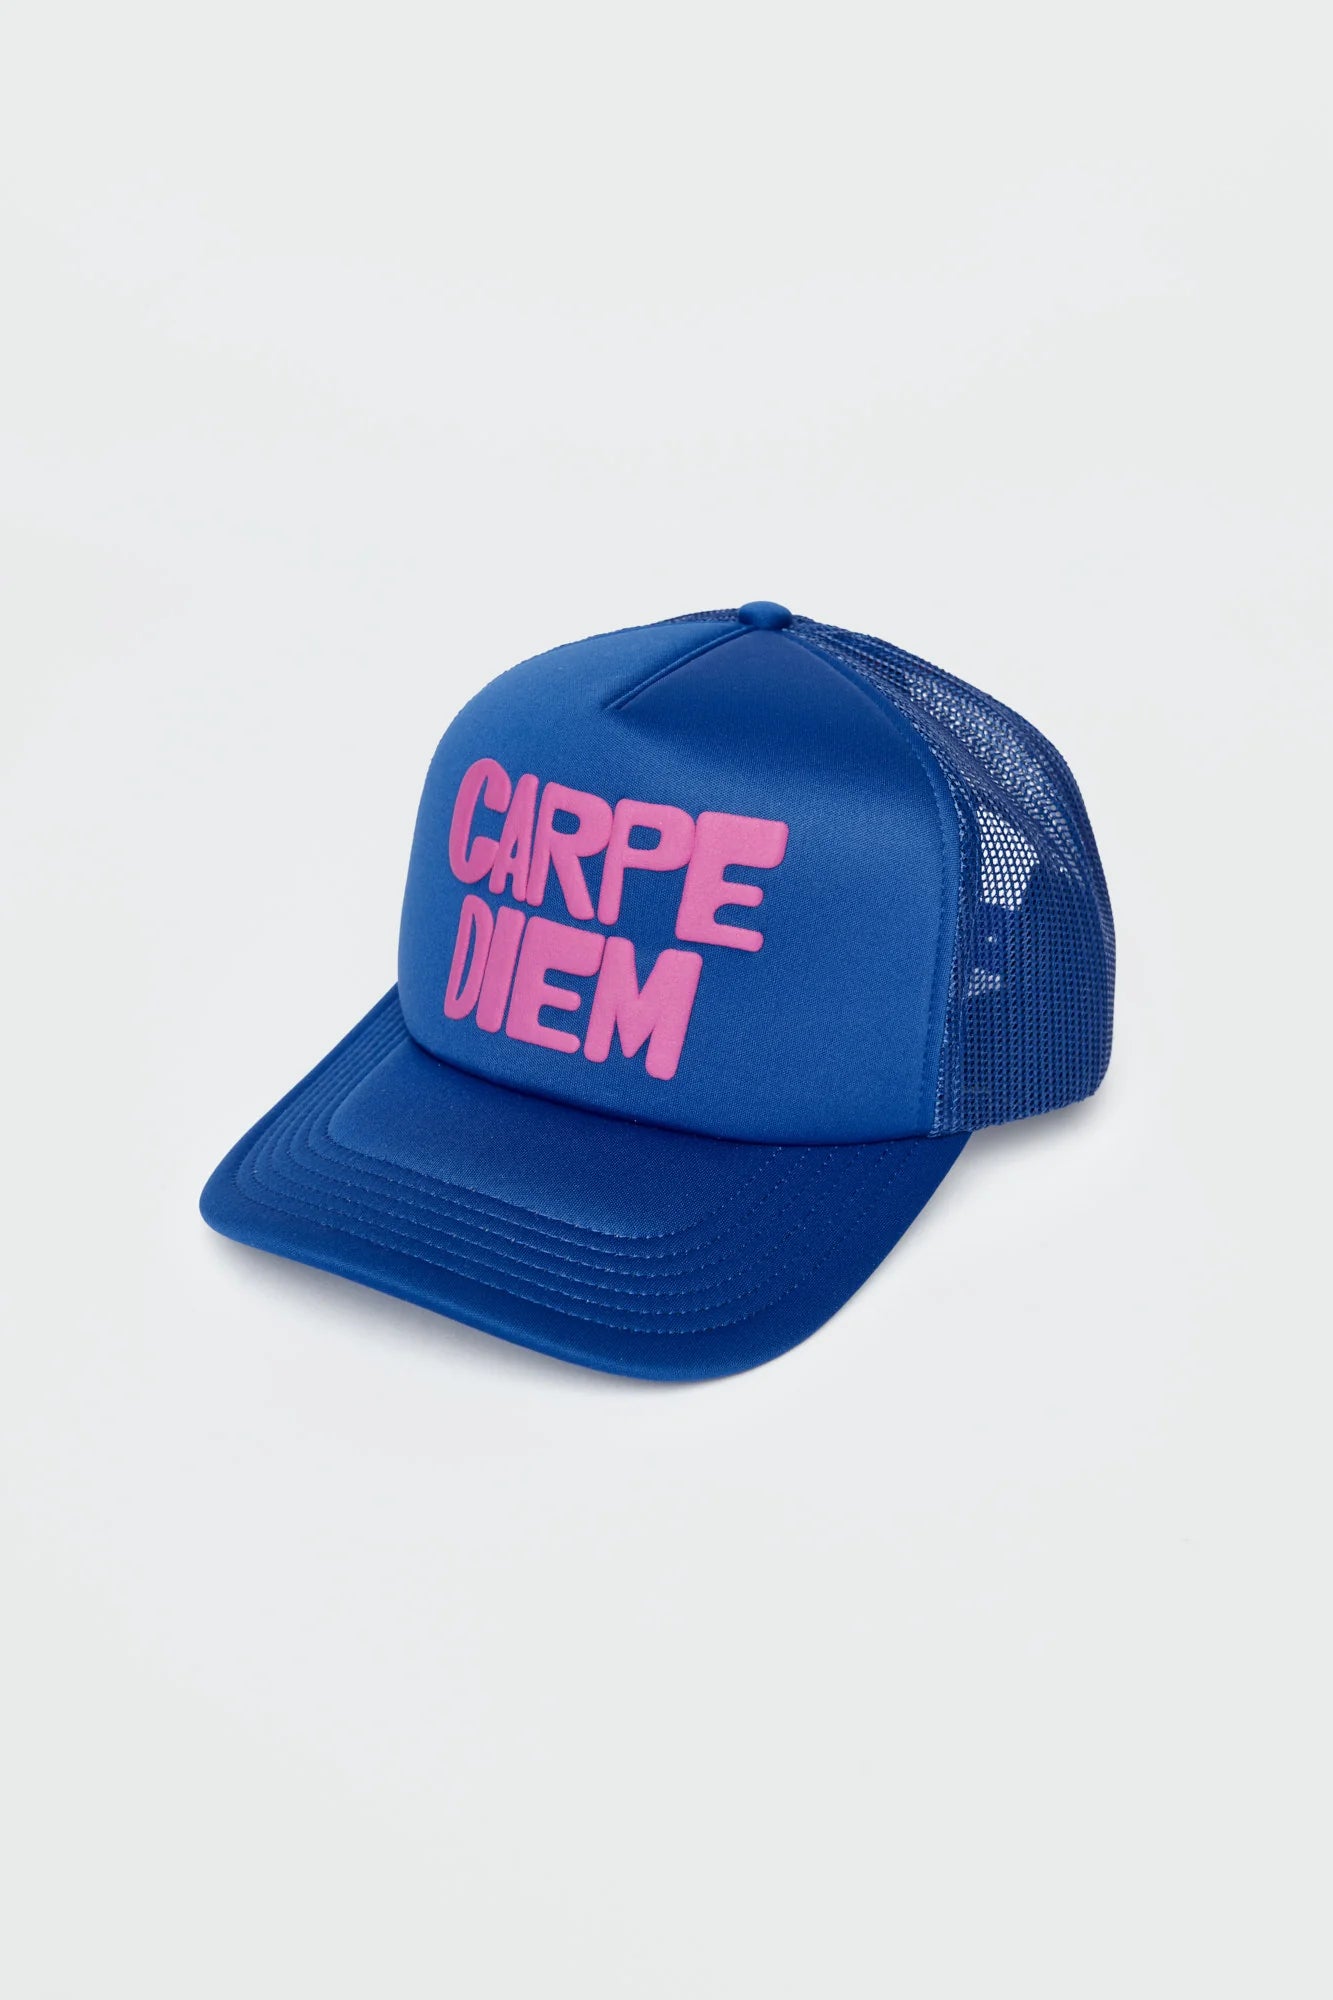 Trucker Hat CARPE DIEM - Blue - Spiritual Gangster